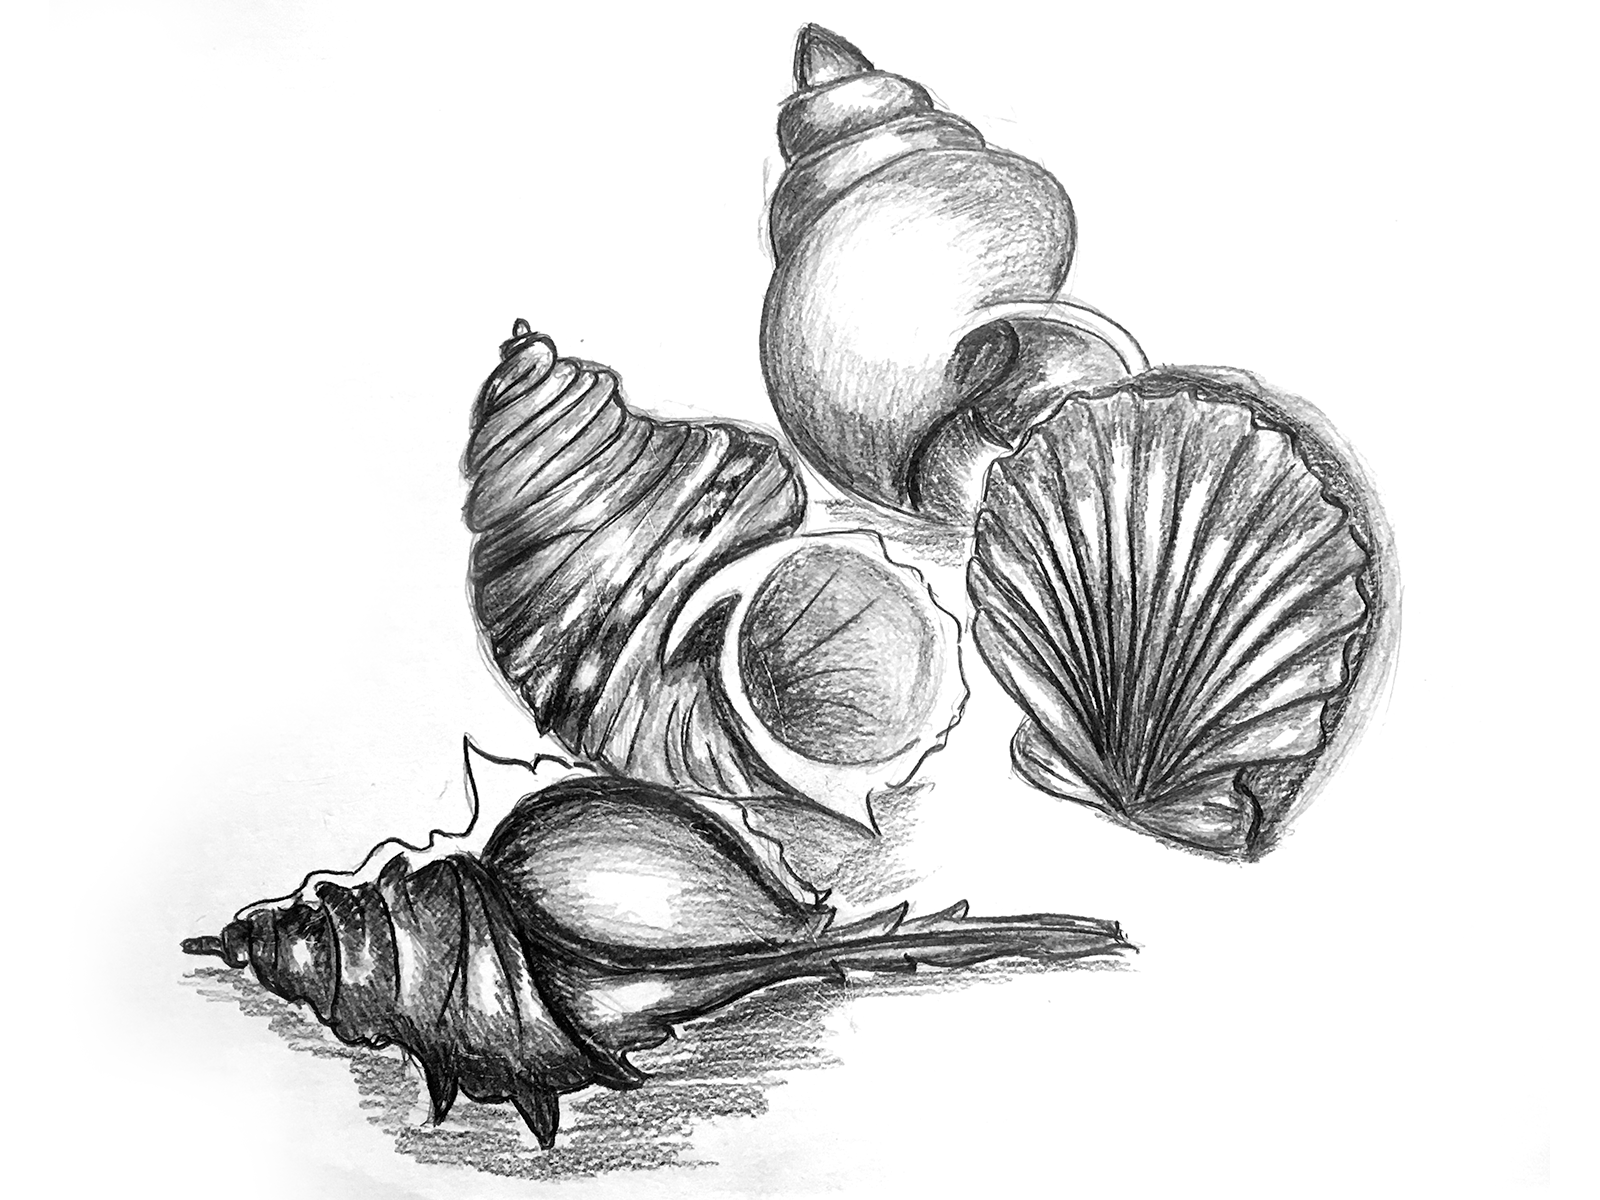 Seashell Sketch by Srishti - The Artist on Dribbble